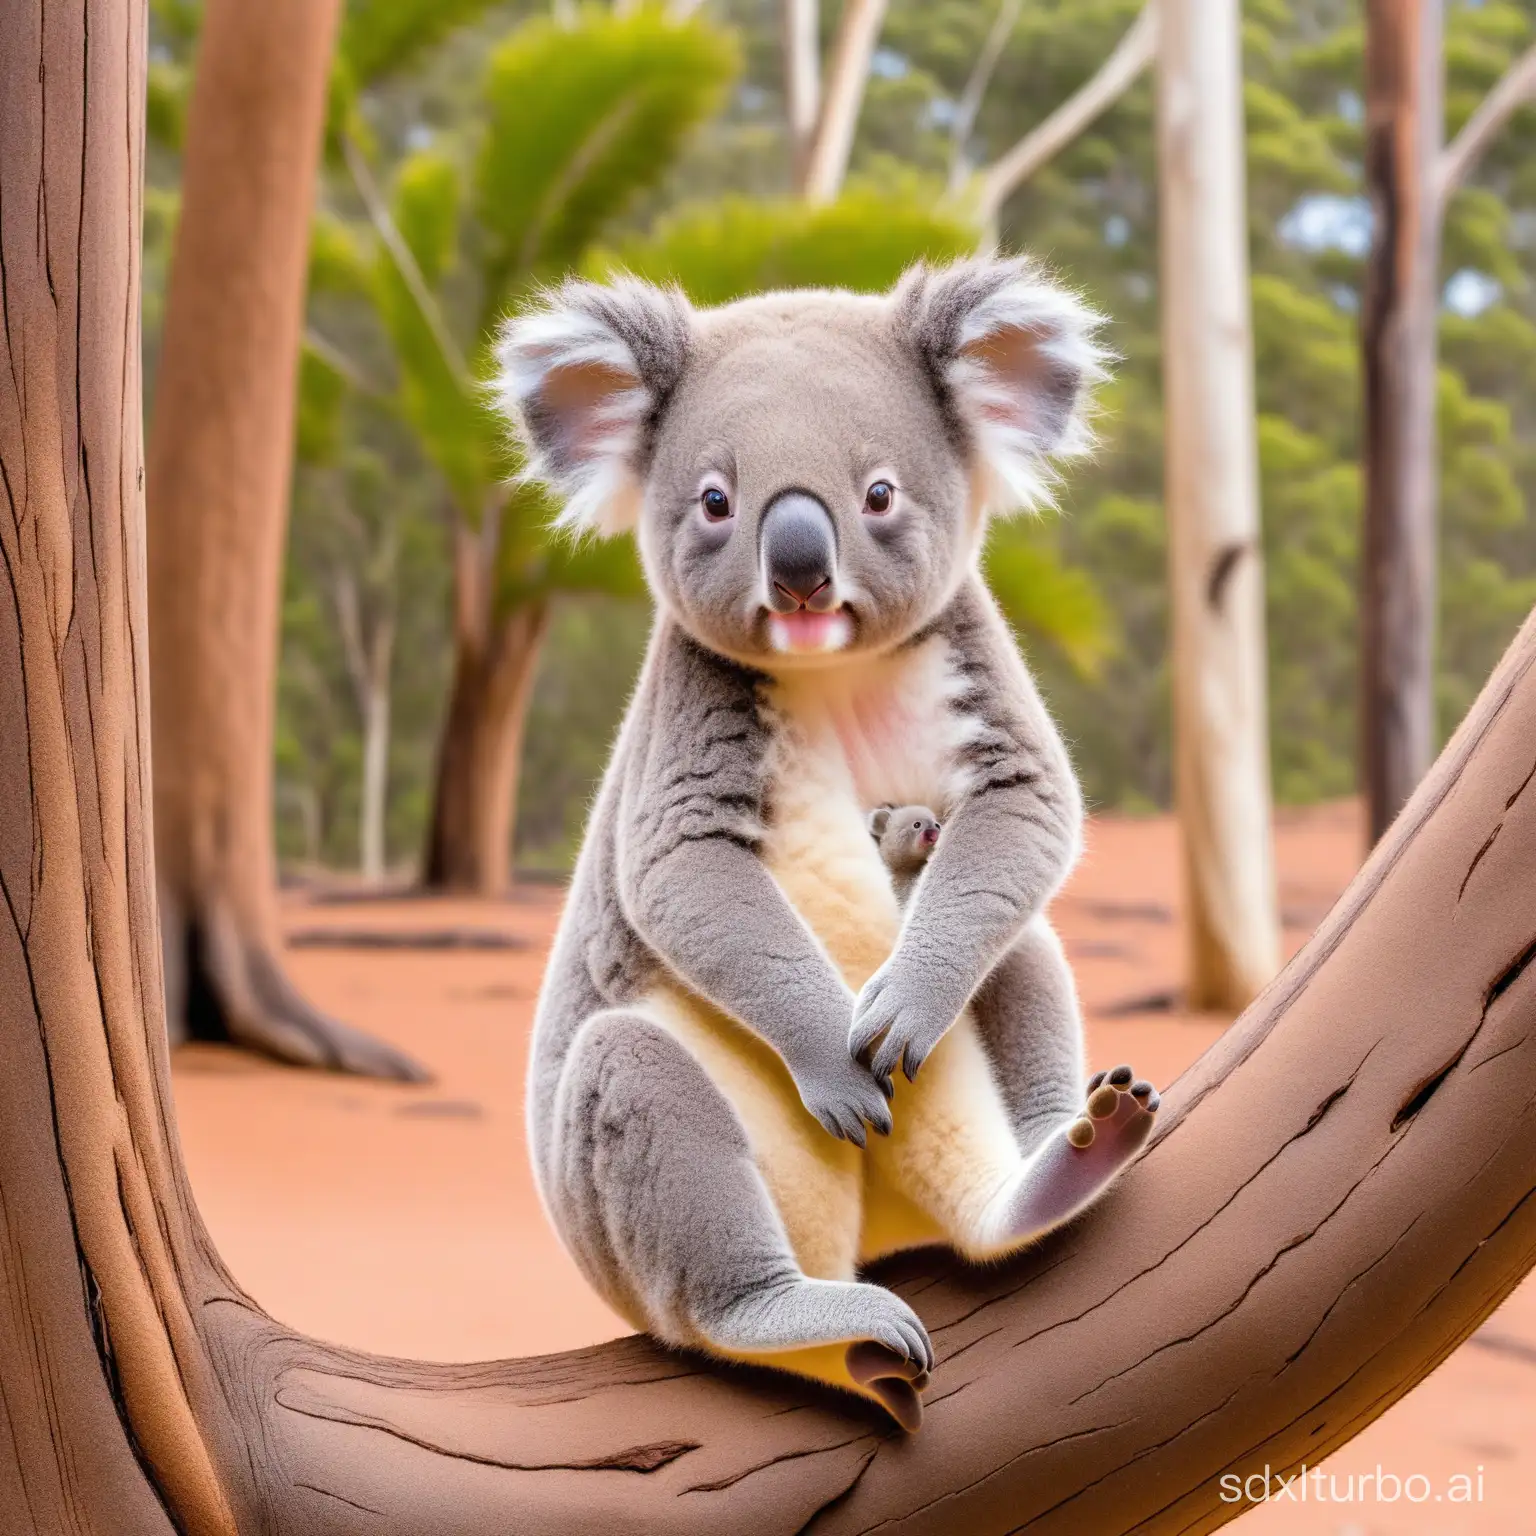 a baby koala, a mother koala and a kangaroo, back ground in Australia bush